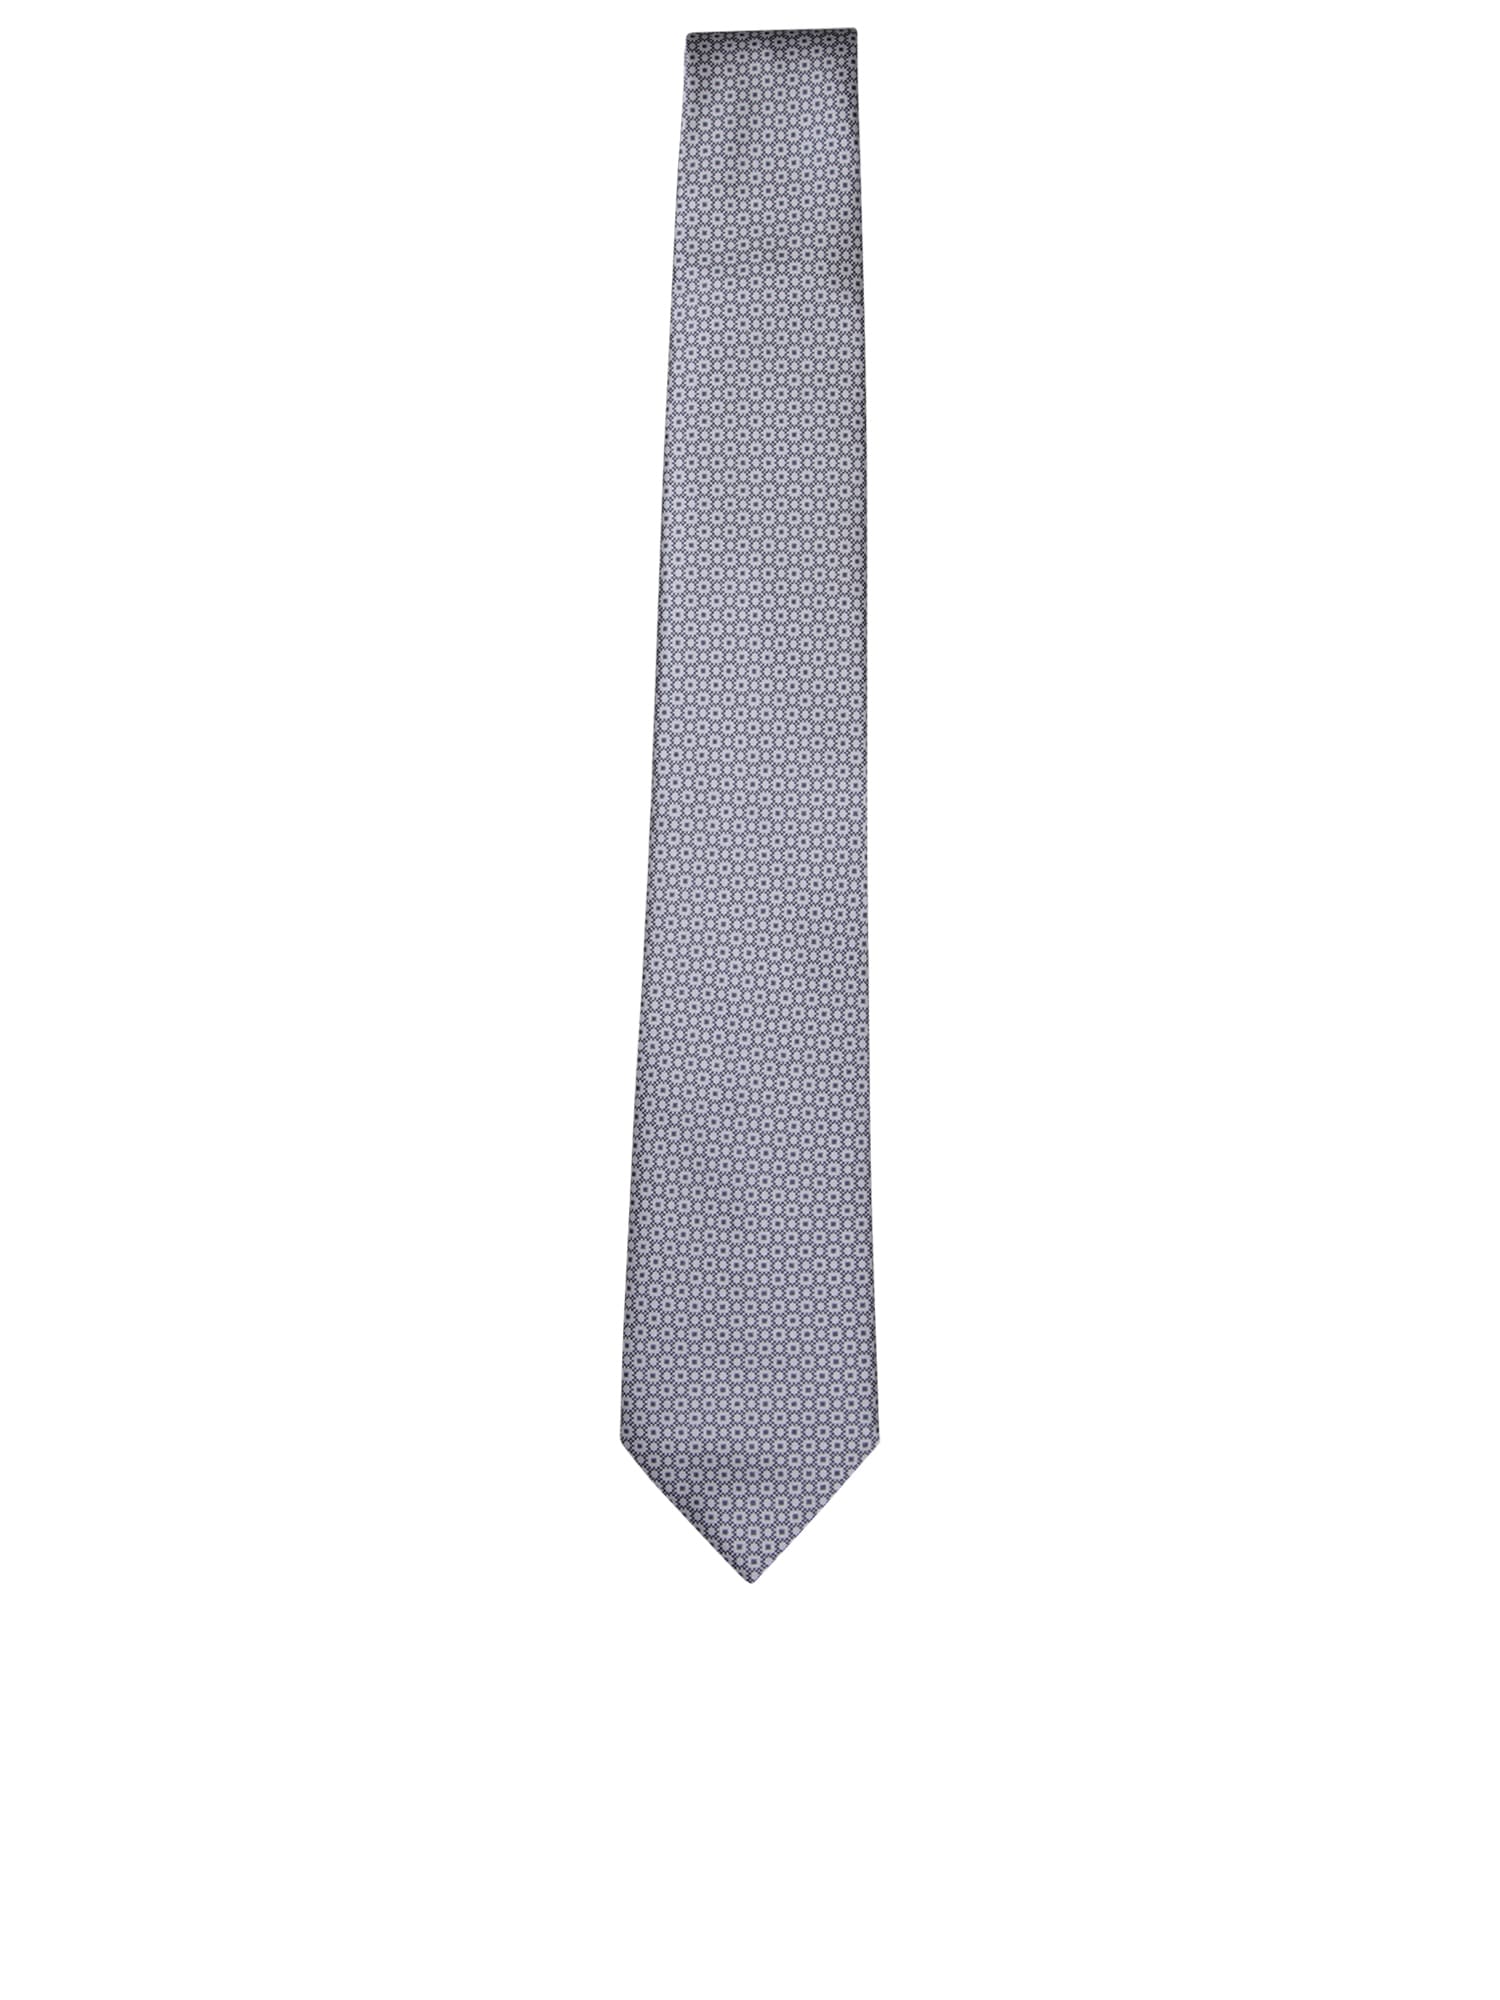 Geometric Grey/light Blue Tie